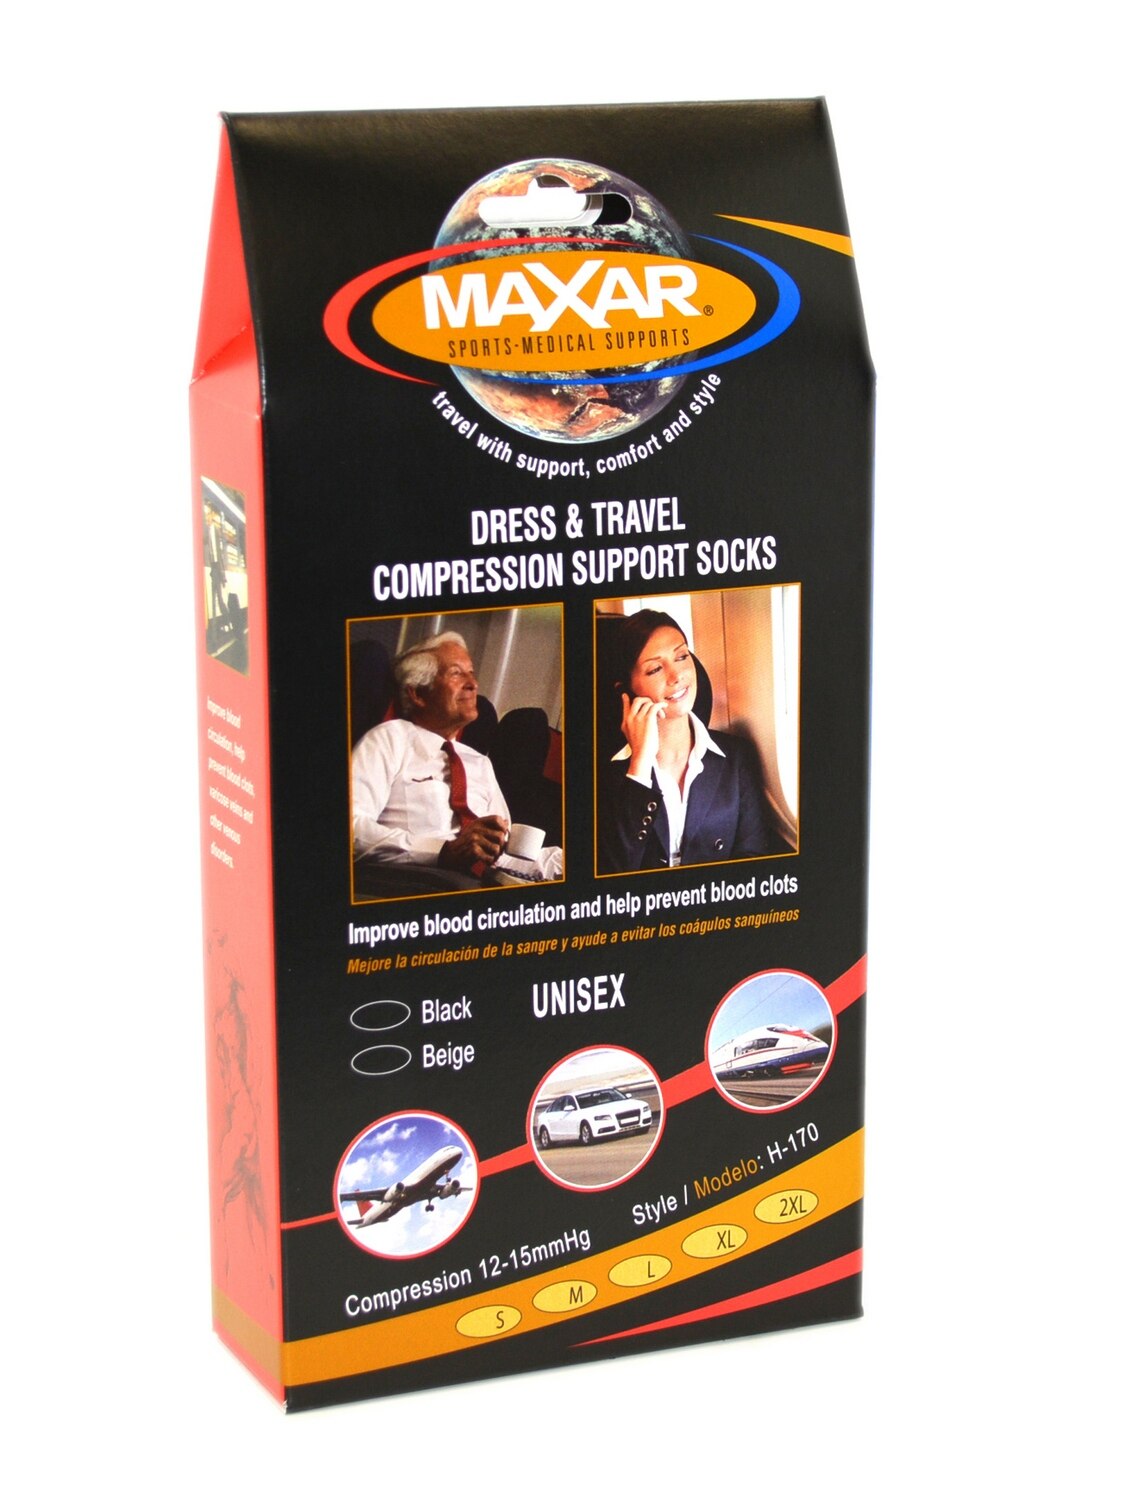 Maxar Unisex Dress and Travel Support Socks